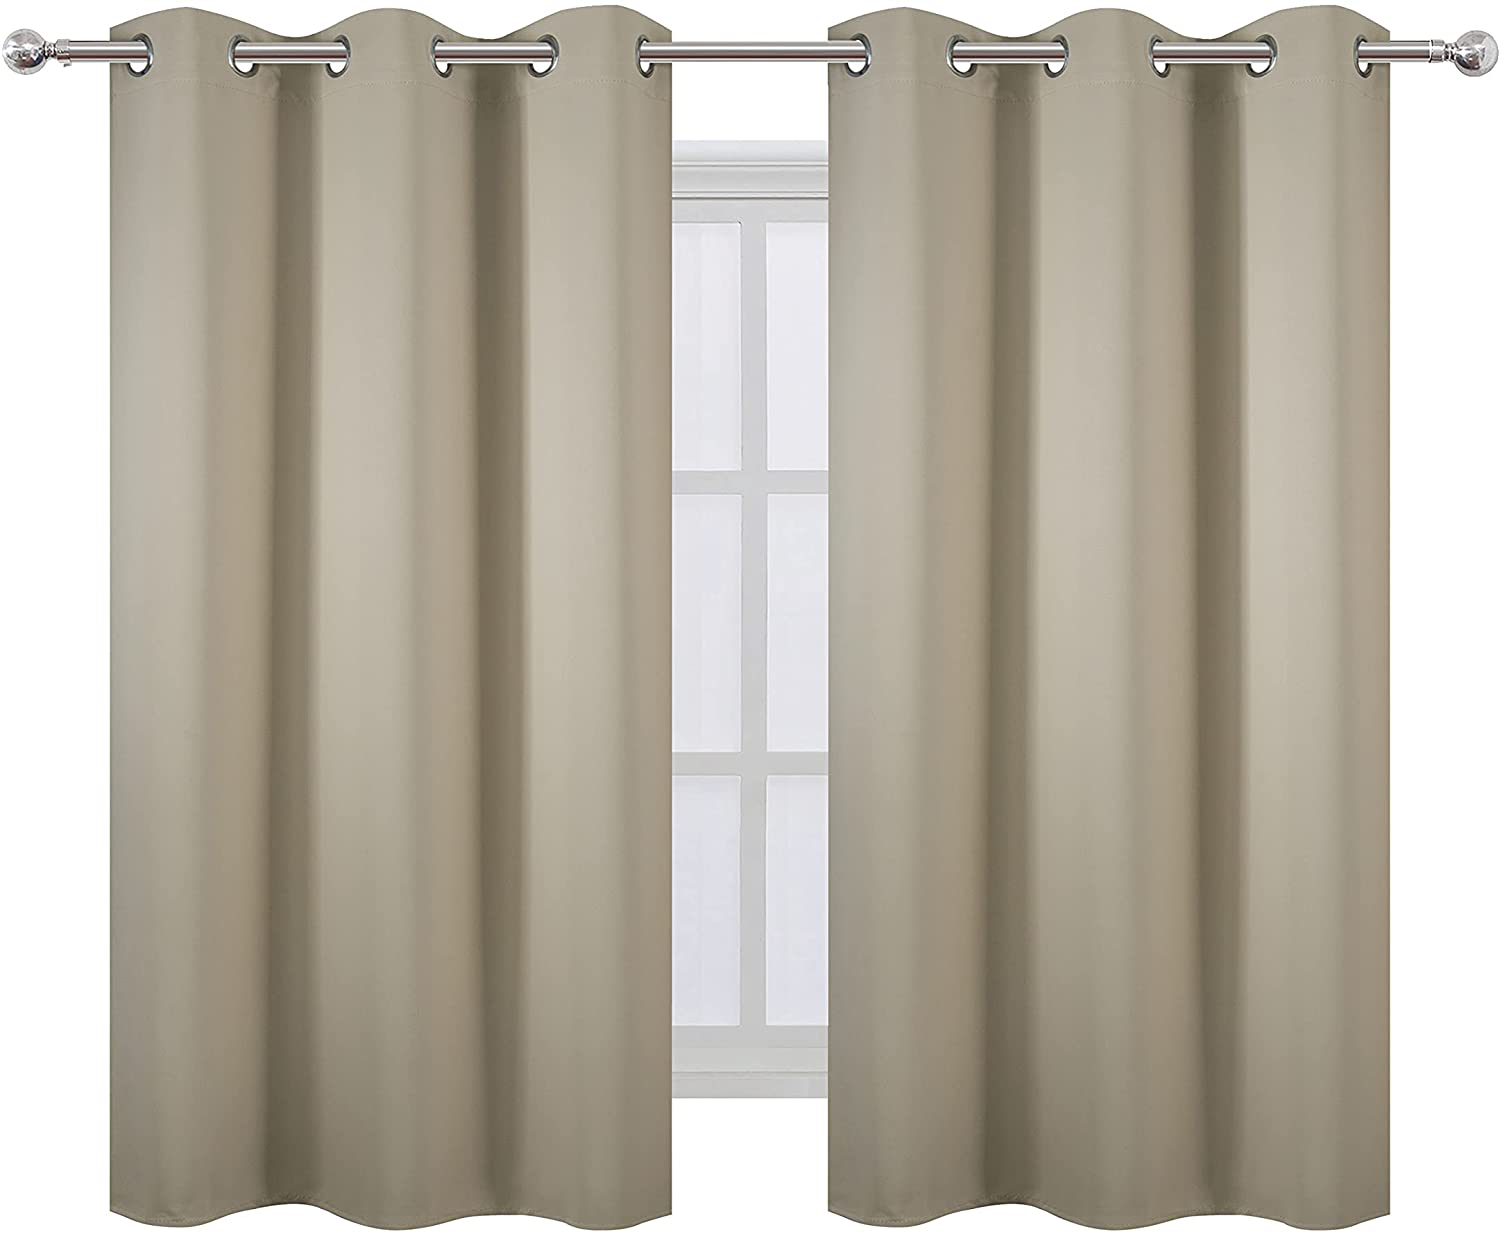 LEMOMO Light Green Thermal Blackout Curtains/42 x 95 Inch/Set of 2 Panels Room Darkening Curtains for Bedroom